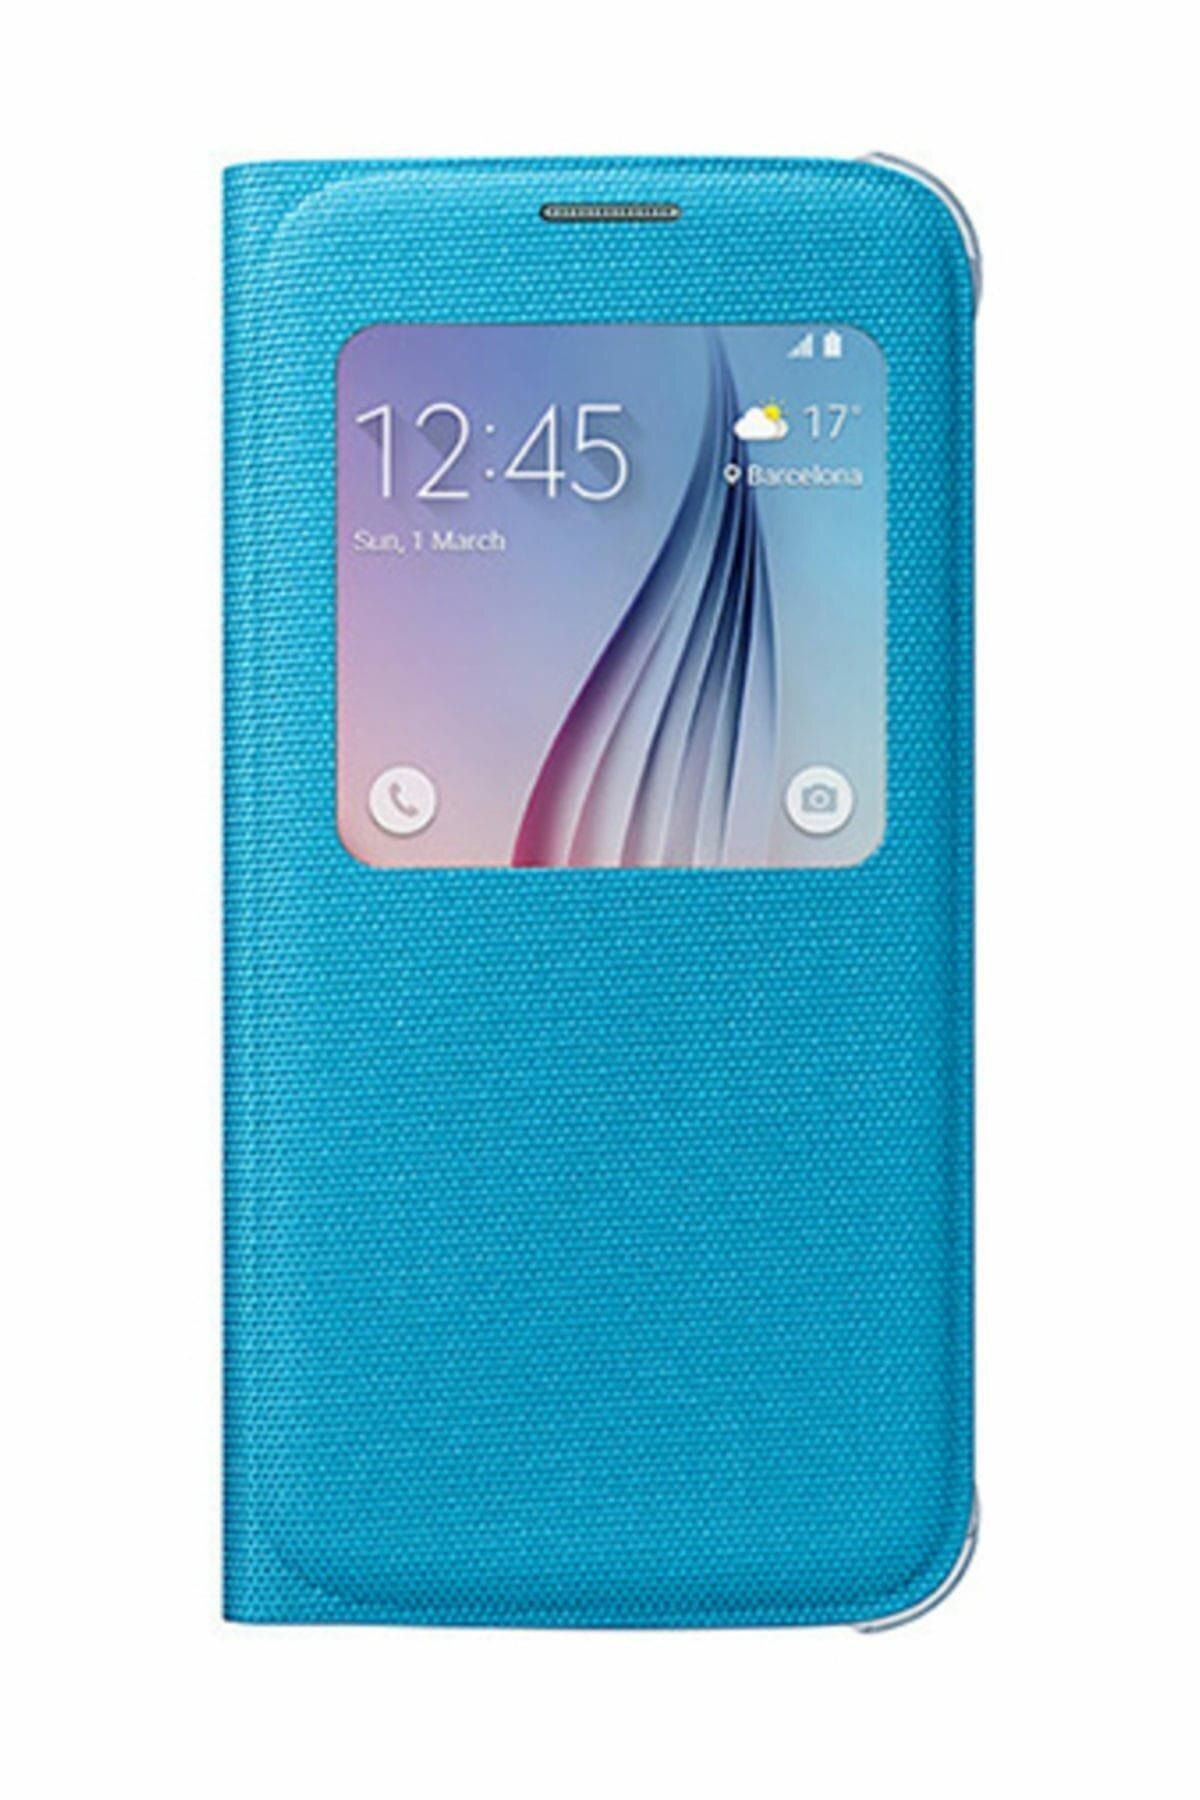 Samsung Galaxy S6 S-view Kılıf Tekstil Mavi Ef-cg920blegww